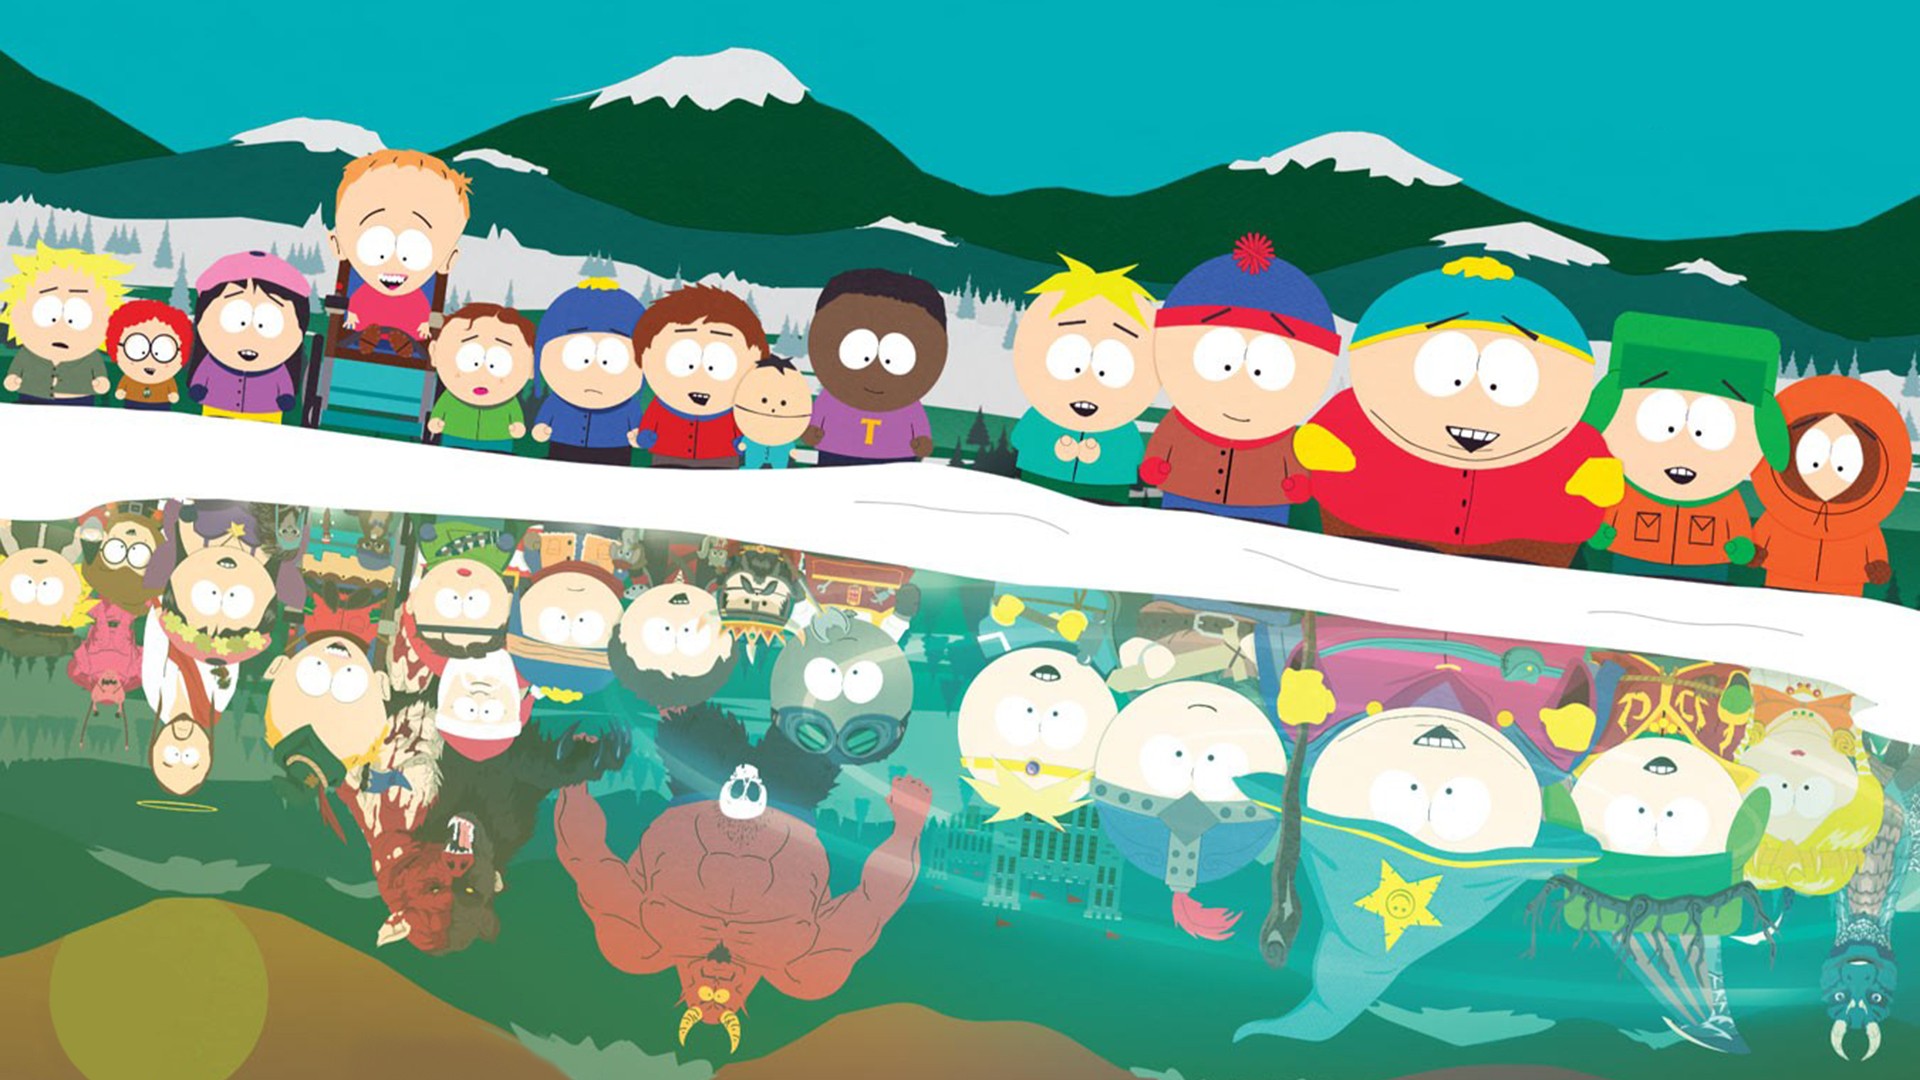 South Park wallpaper ·① Download free full HD backgrounds for desktop